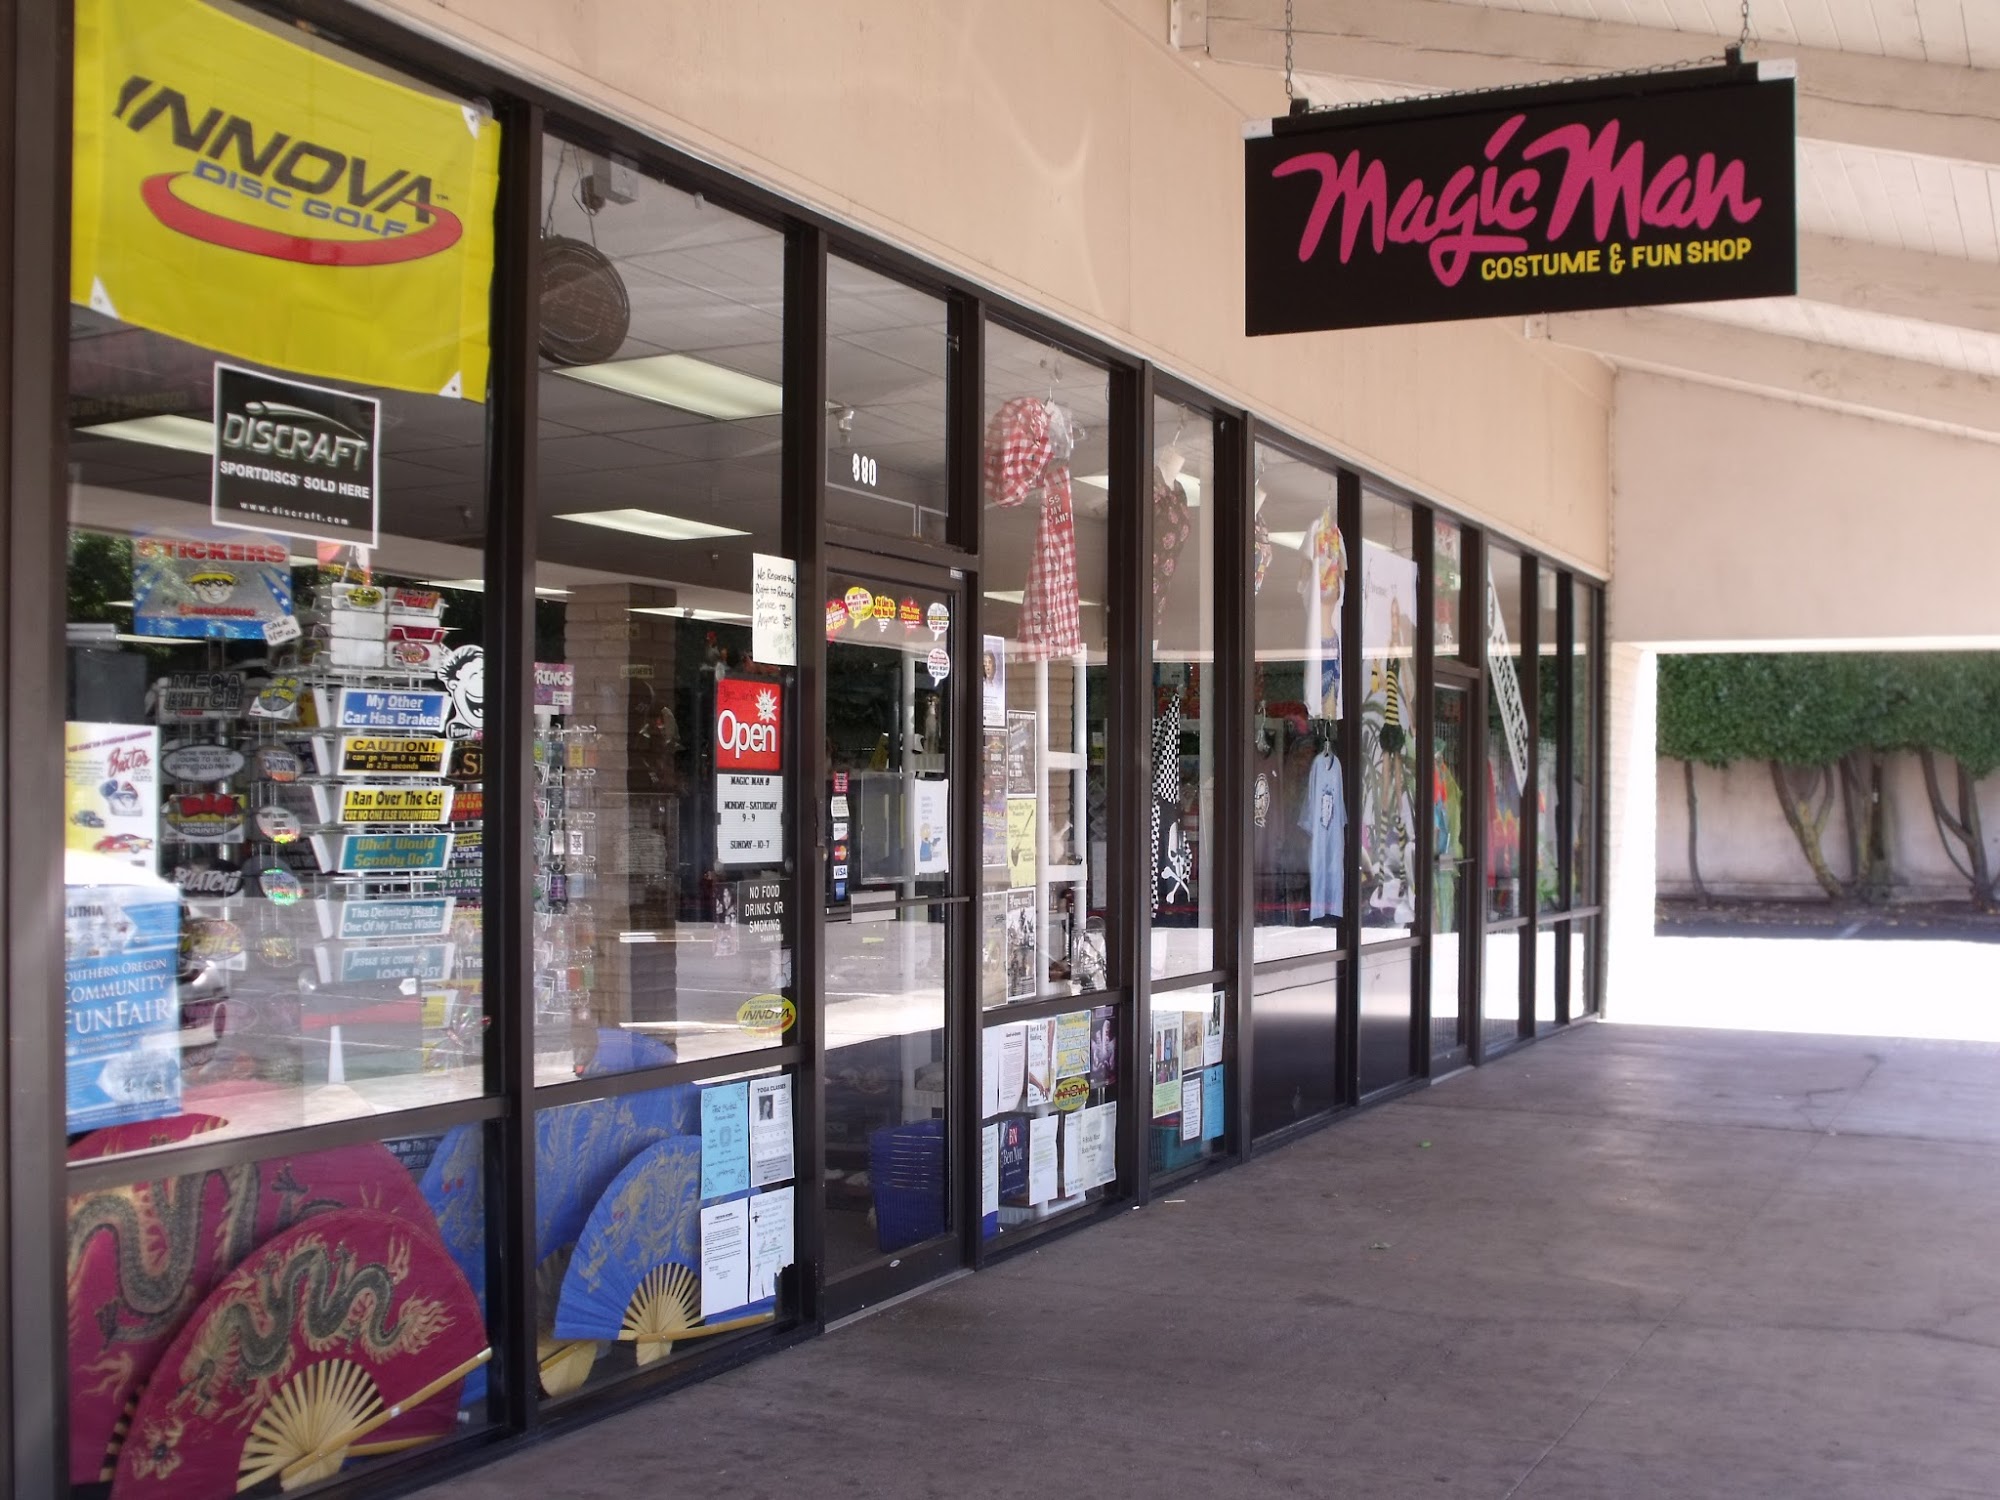 Magic Man Fun Shop Medford